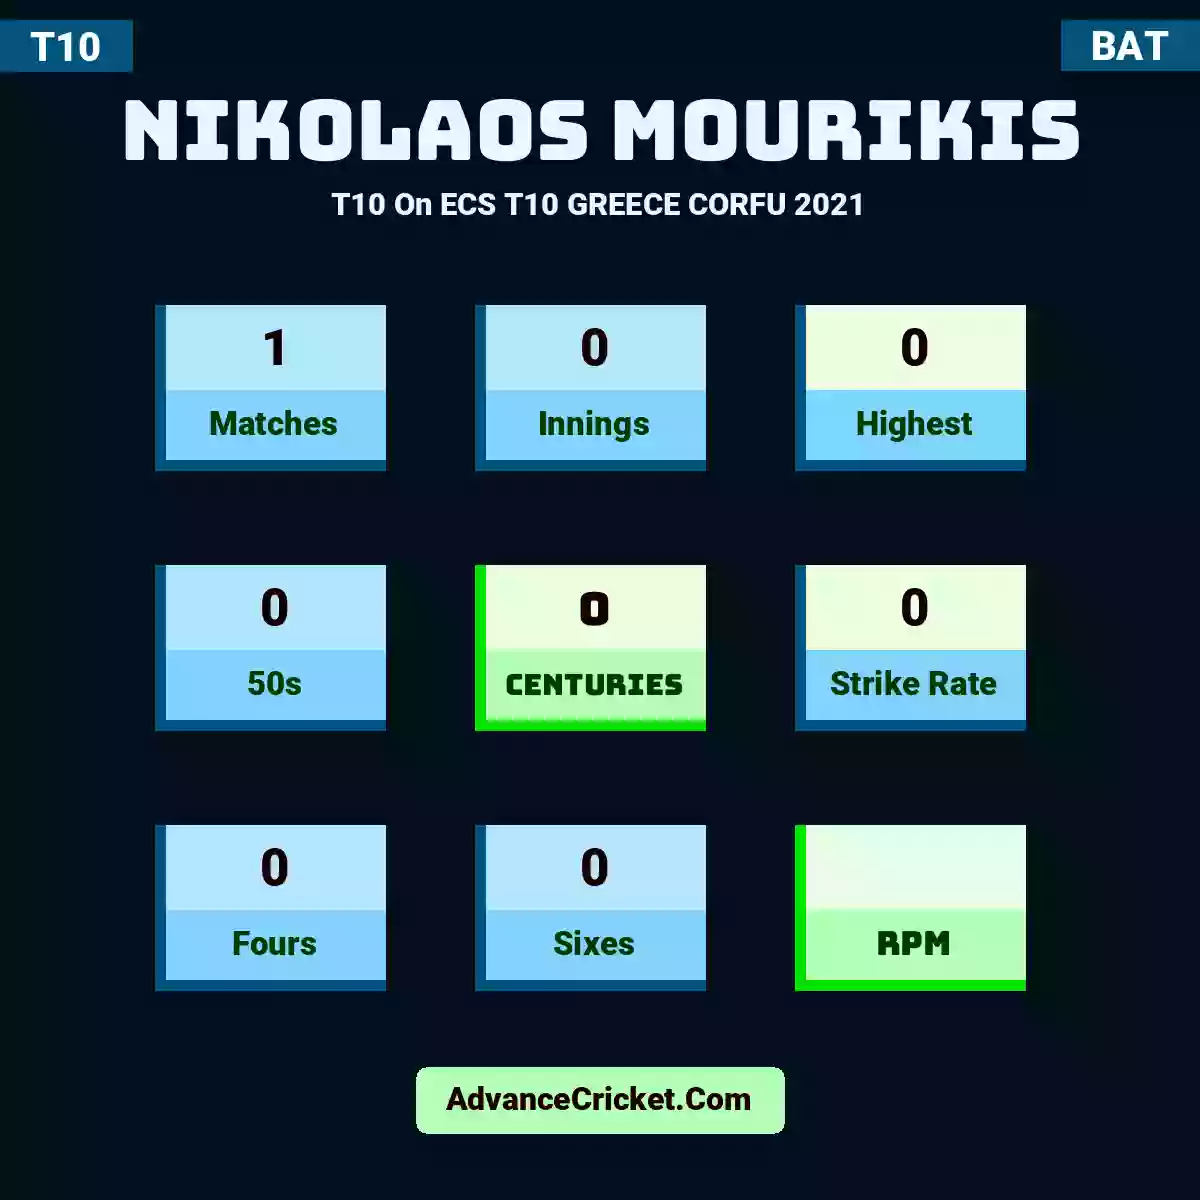 Nikolaos Mourikis T10  On ECS T10 GREECE CORFU 2021, Nikolaos Mourikis played 1 matches, scored 0 runs as highest, 0 half-centuries, and 0 centuries, with a strike rate of 0. N.Mourikis hit 0 fours and 0 sixes.